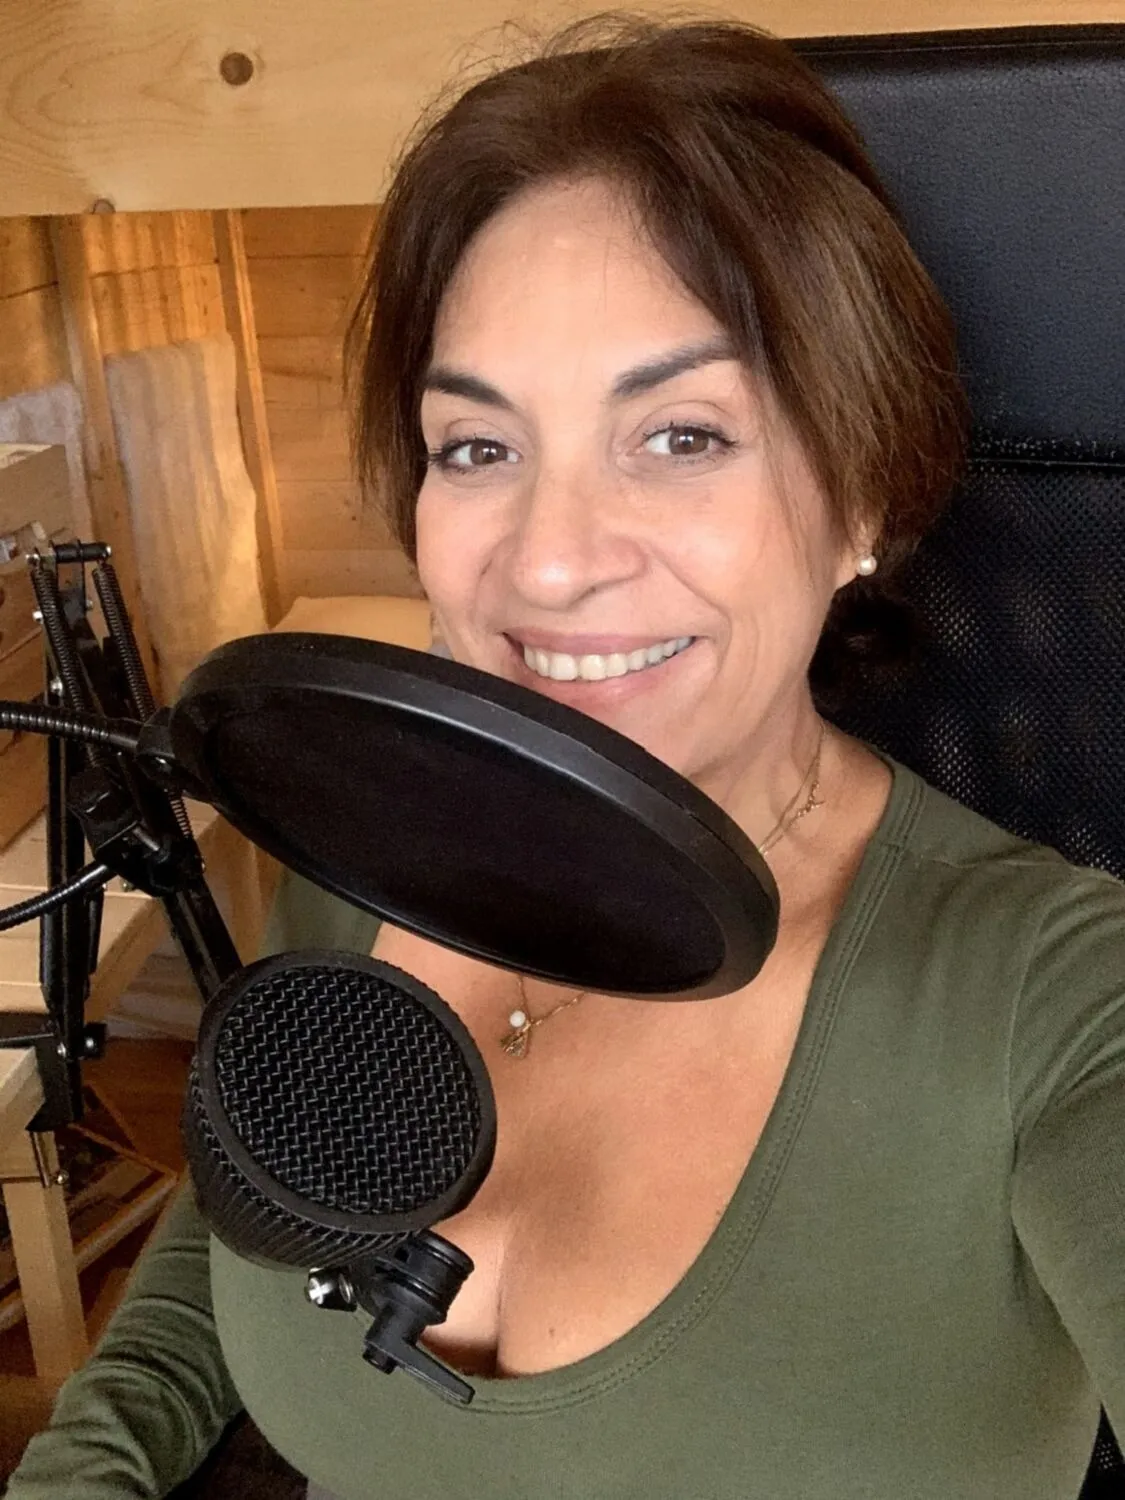 Dina Rachid volta a A TARDE FM após 37 anos